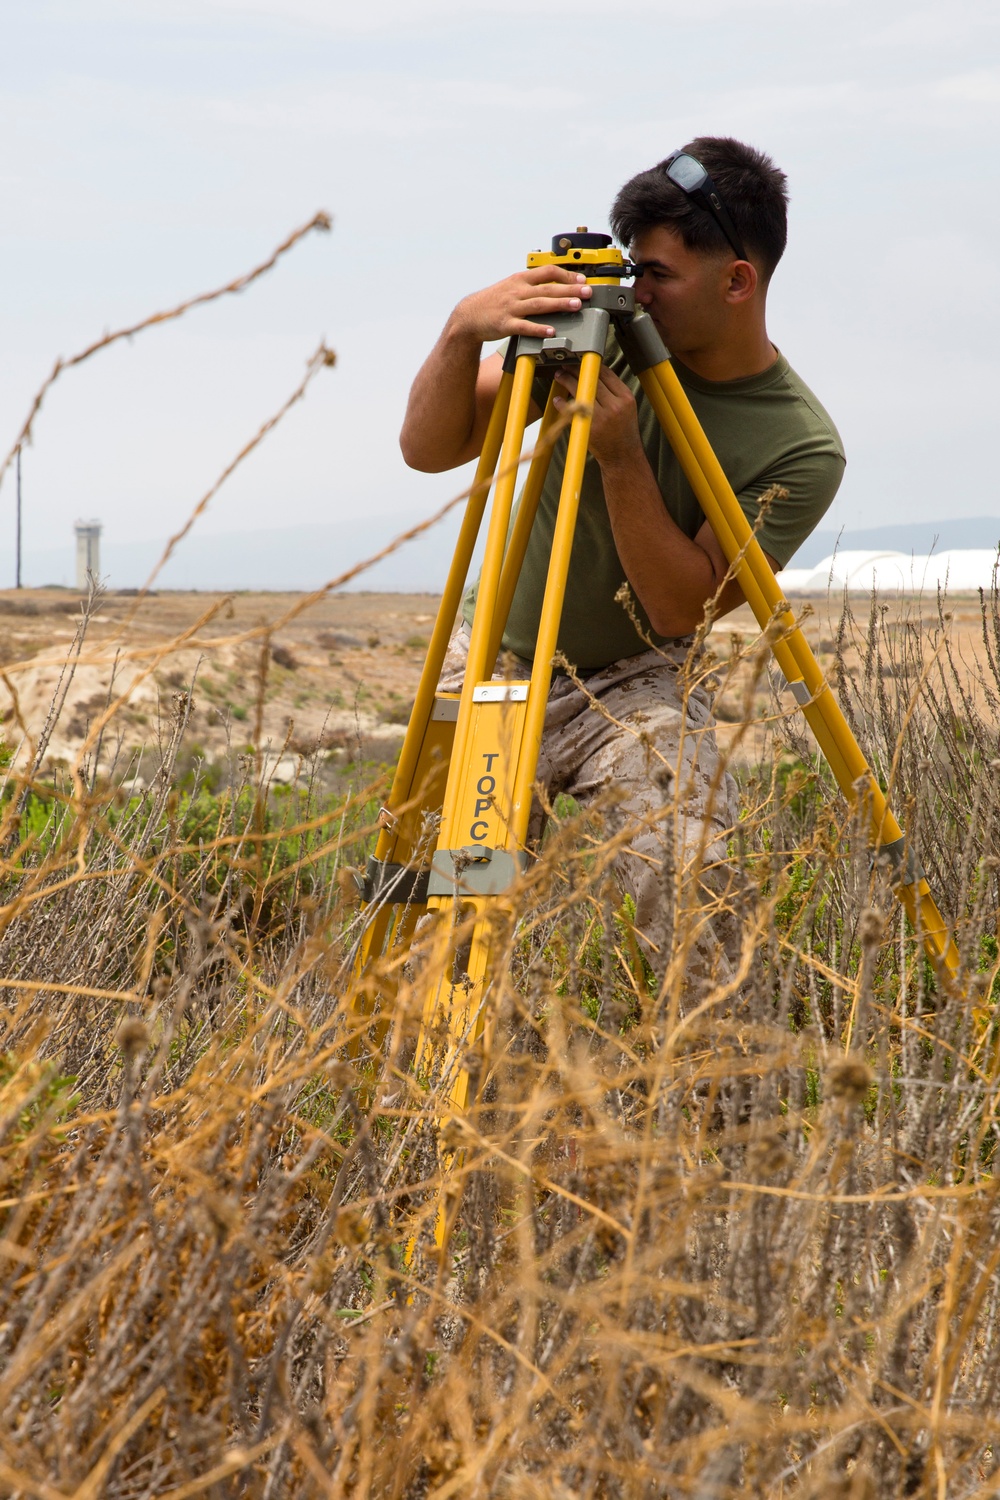 Claiming the beach: Marines pioneer subsurface survey program